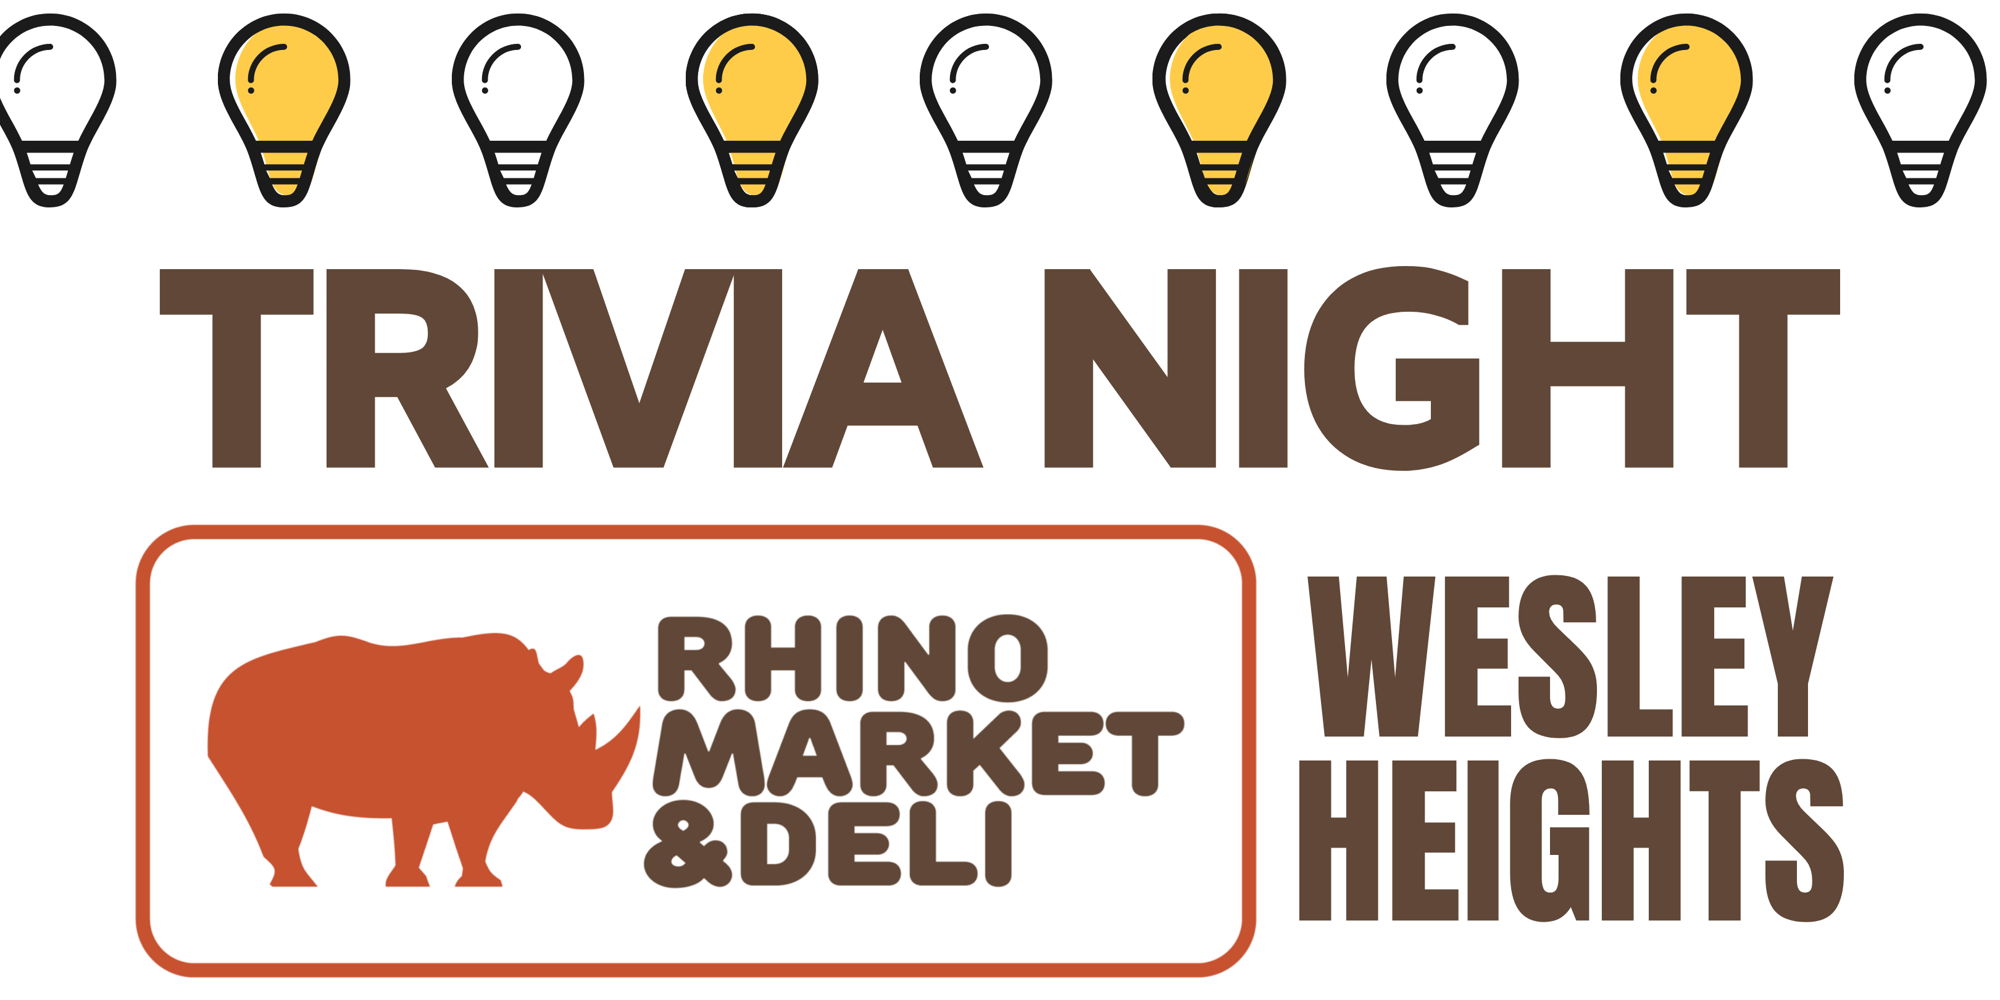 TRIVIA NIGHT at Rhino Market & Deli - W. Morehead St promotional image